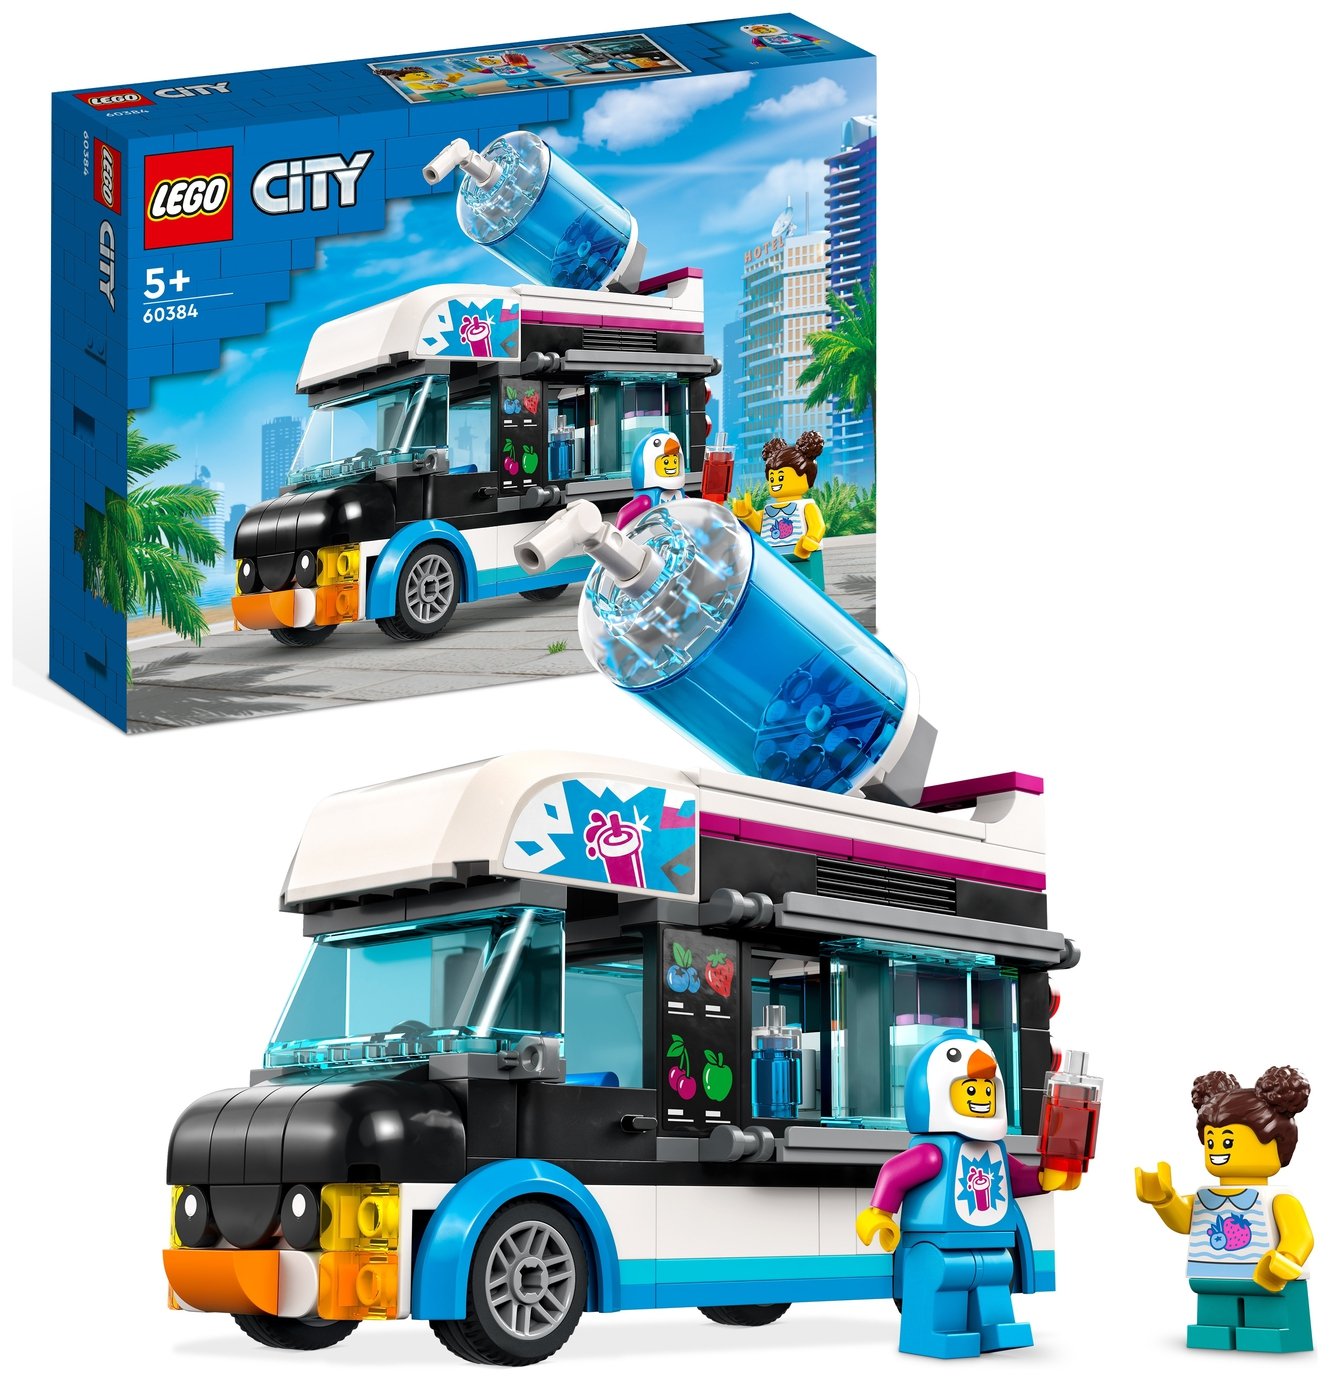 LEGO City Great Vehicles Penguin Slushy Van Truck Toy 60384 review